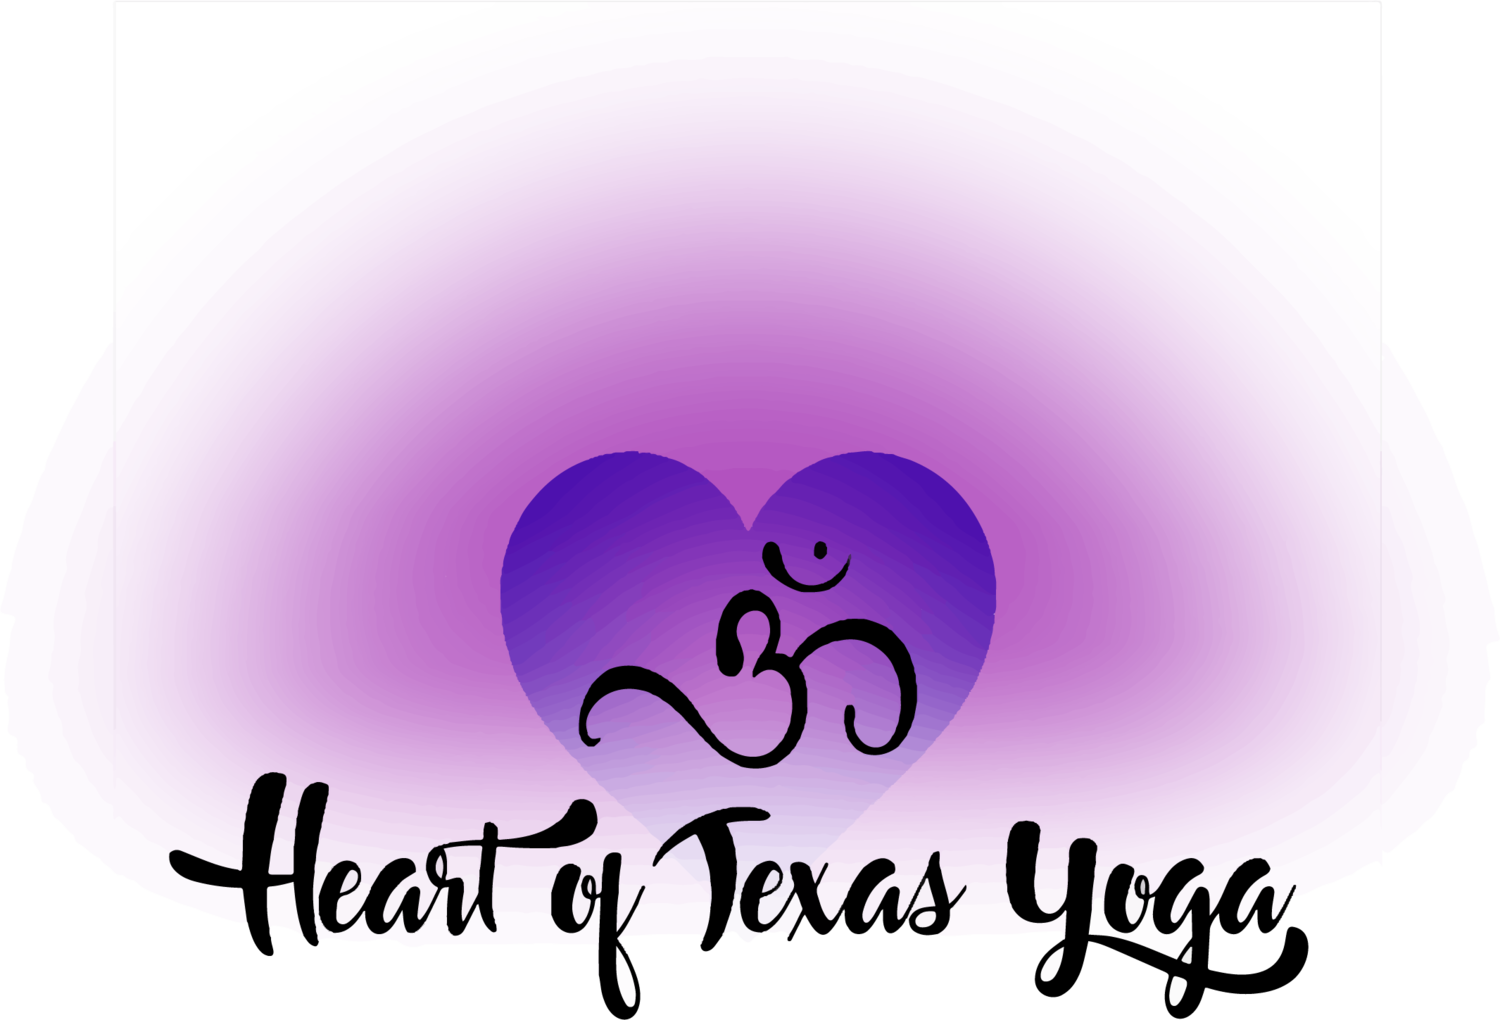 Heart of Texas Yoga